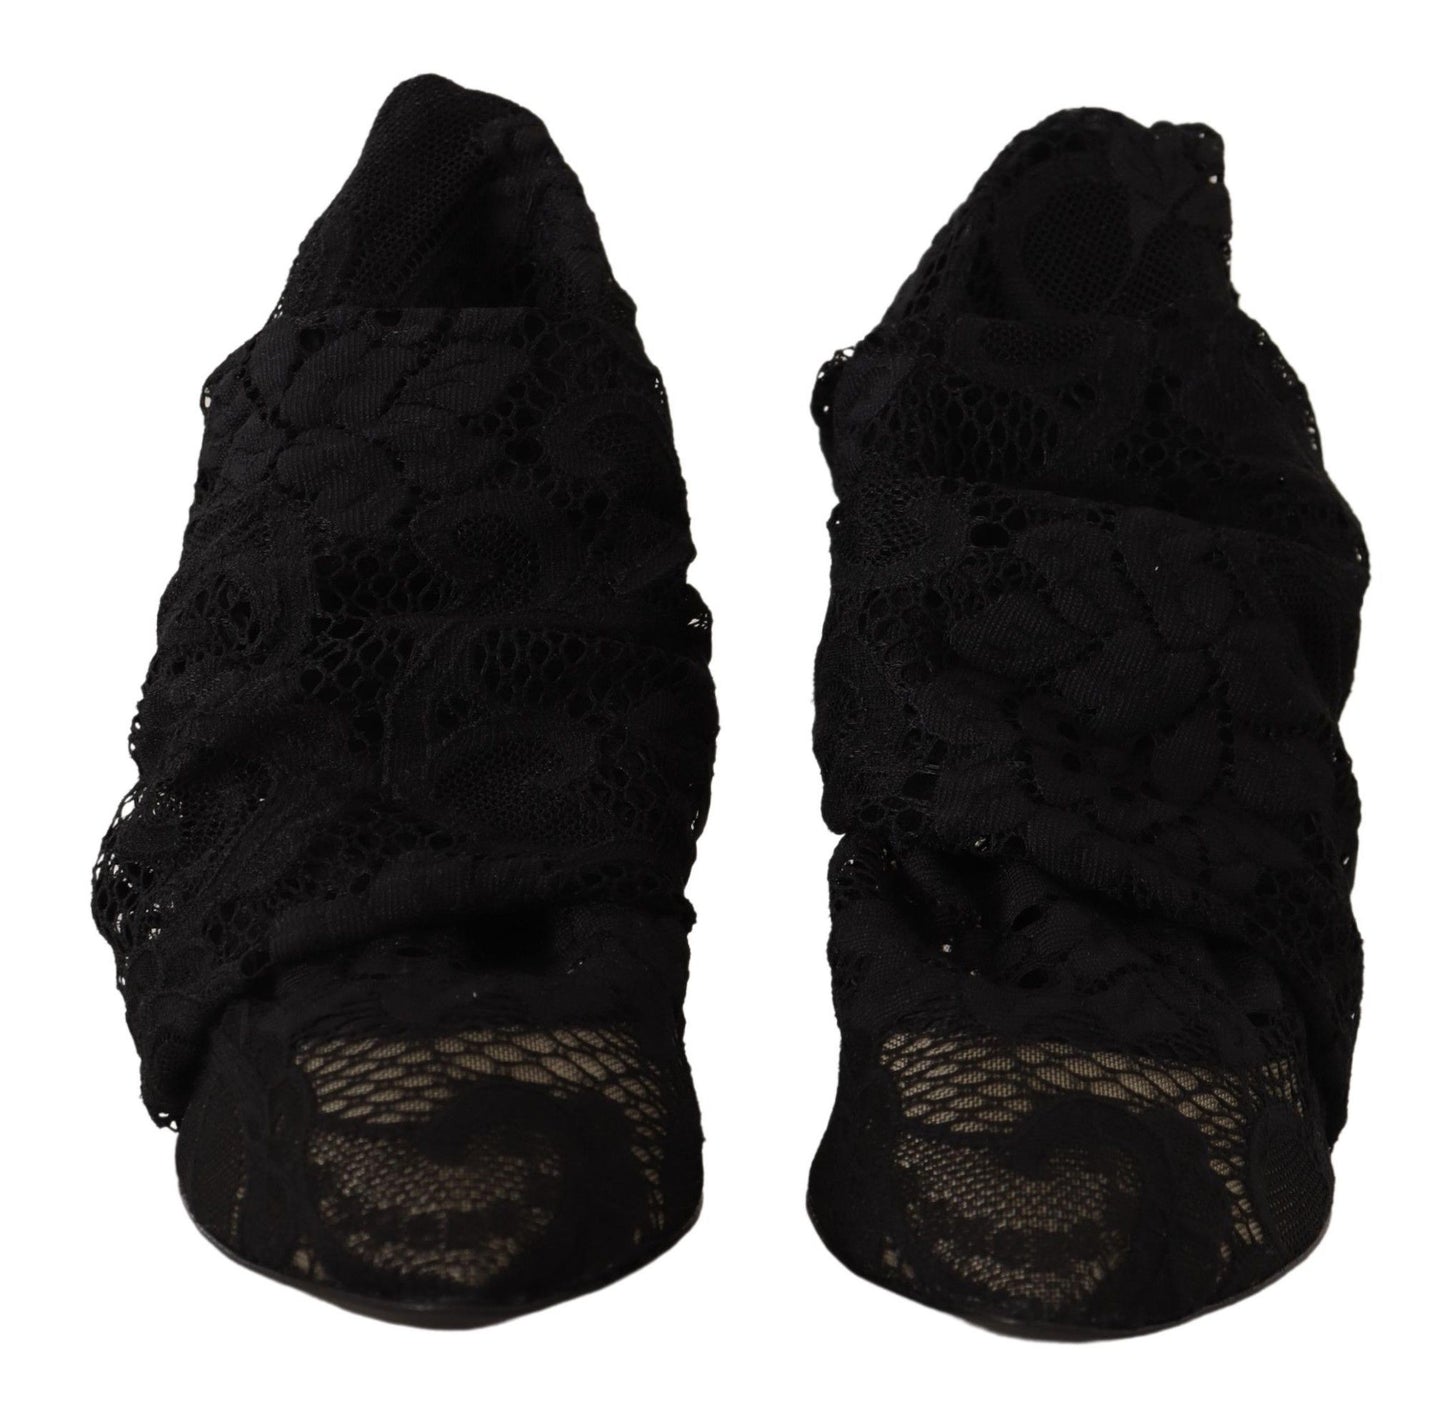 Elegant Stretch Sock Boots in Sleek Black